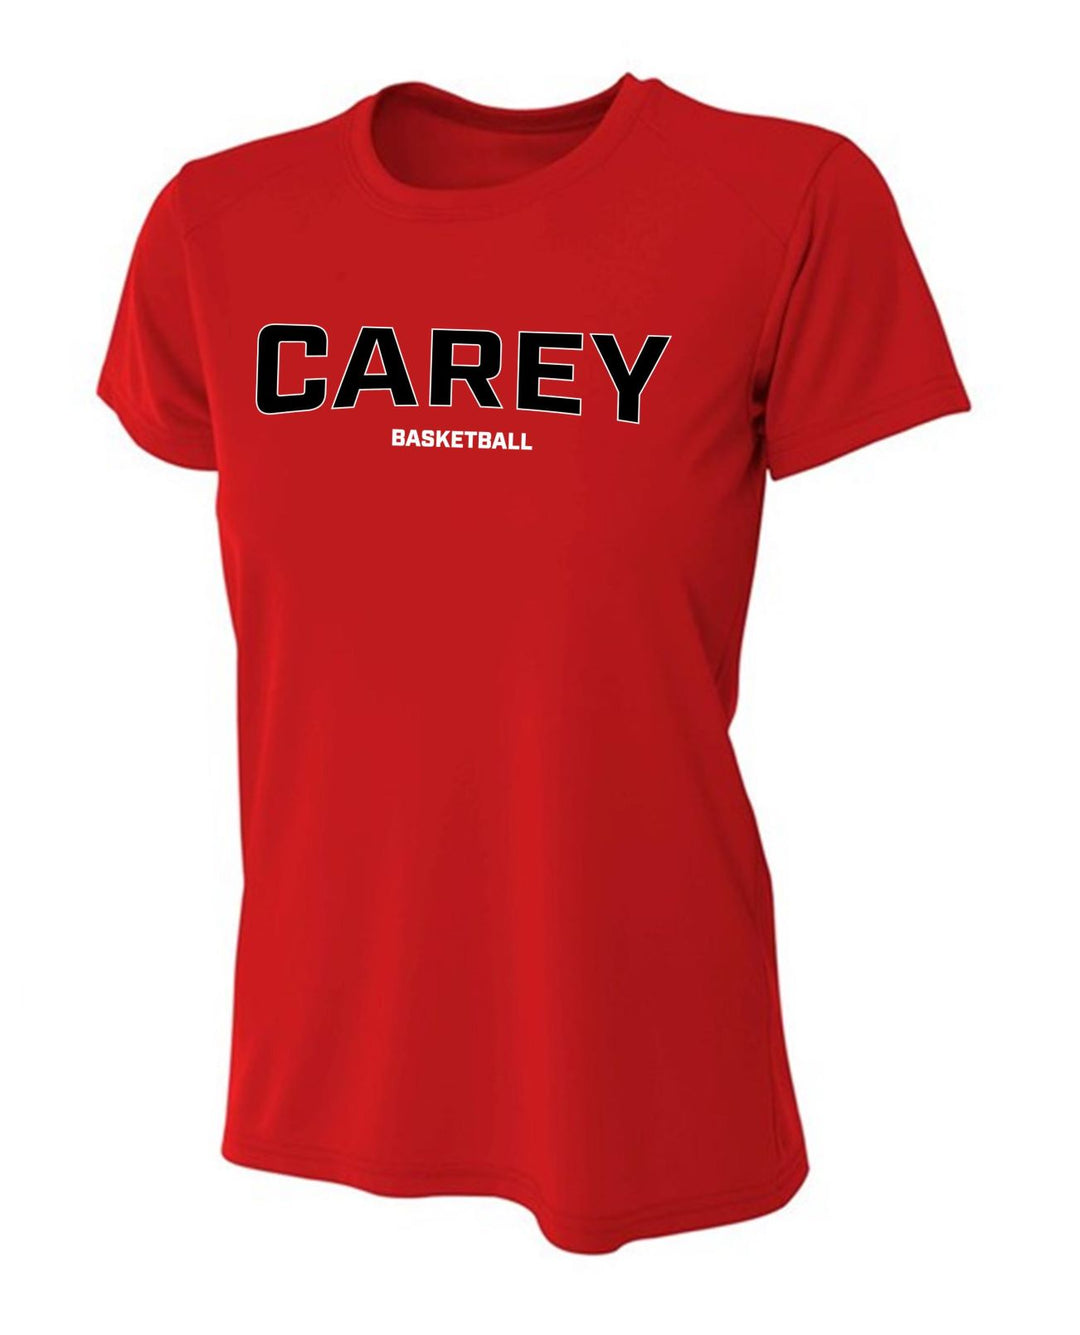 WCU Basketball Women's Short-Sleeve Performance Shirt WCU Basketball Red CAREY - Third Coast Soccer